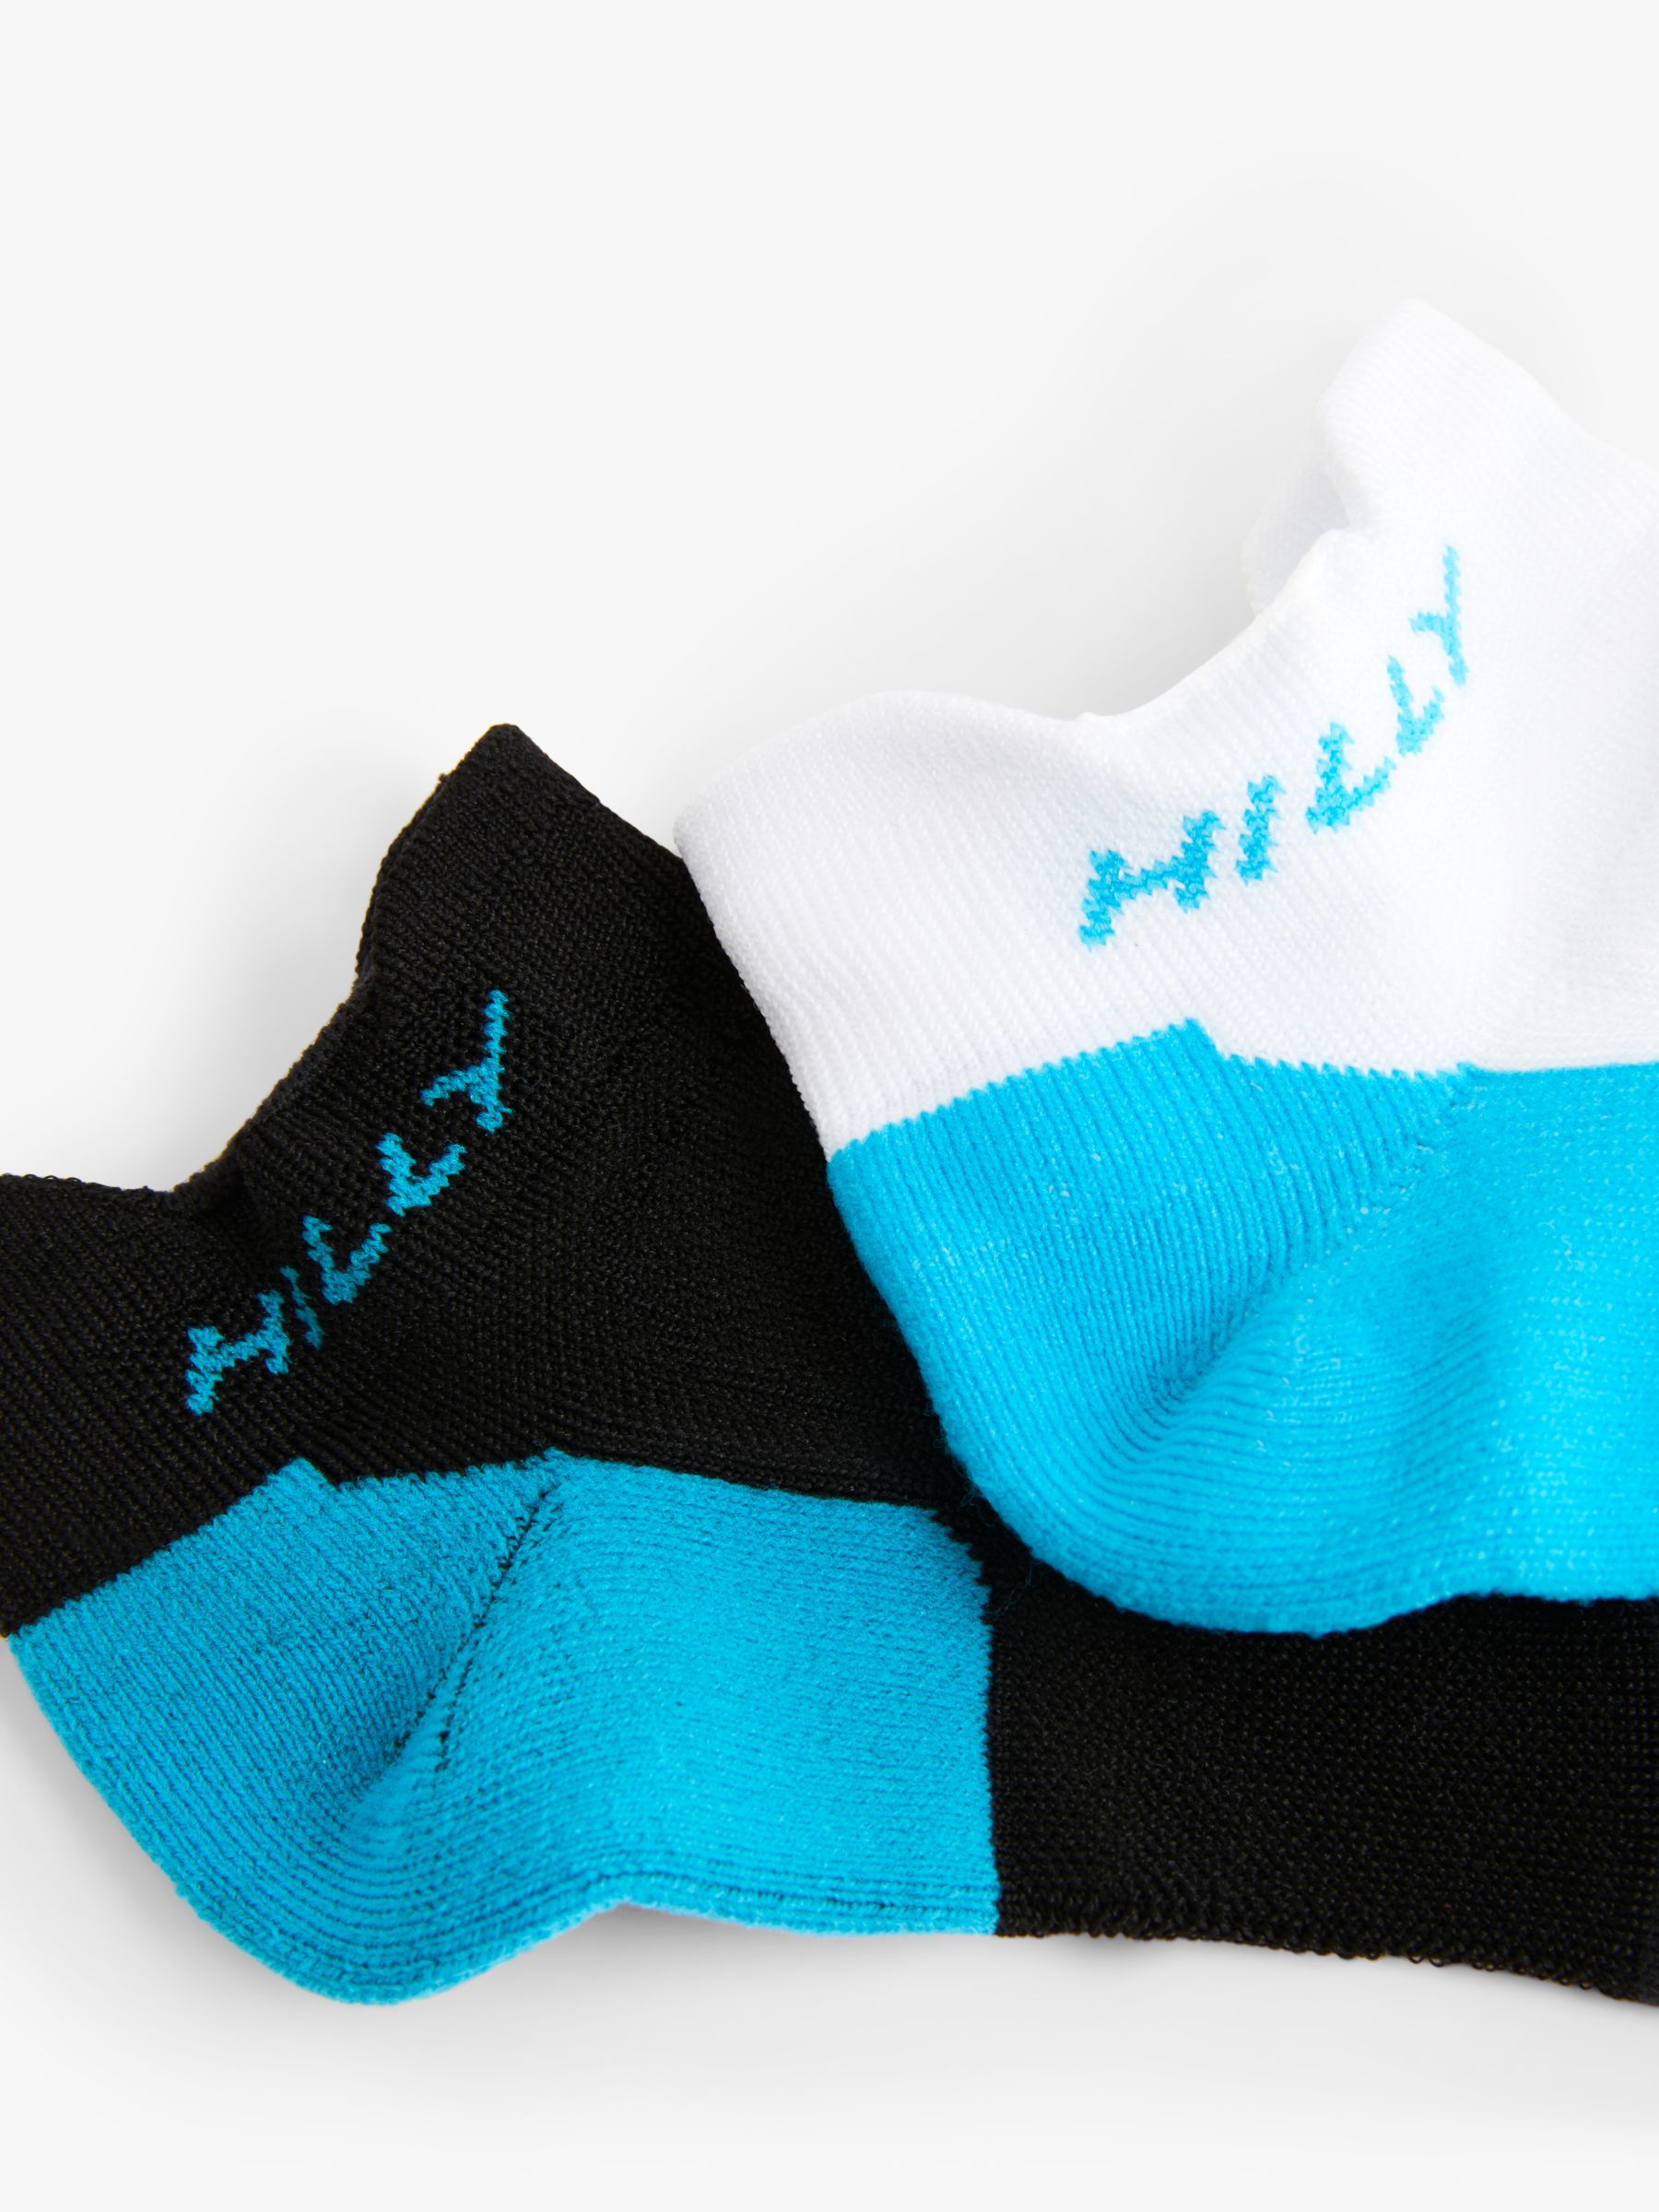 Hilly Active Socklet Min Running Socks, Pack of 2, White/Black/Grey, S